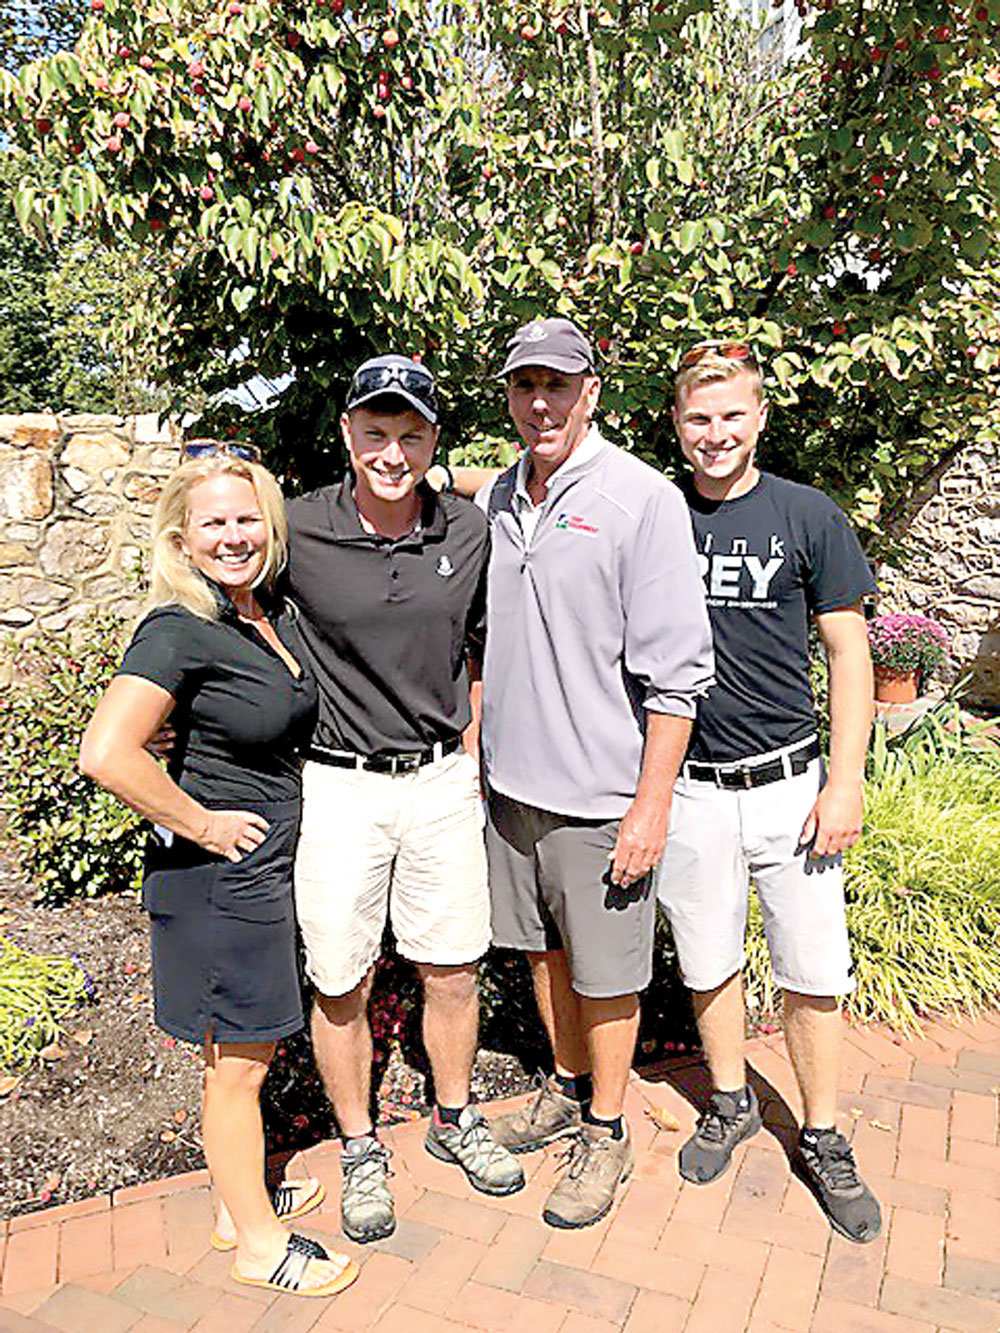 The Renk family at Lookaway Golf Club.